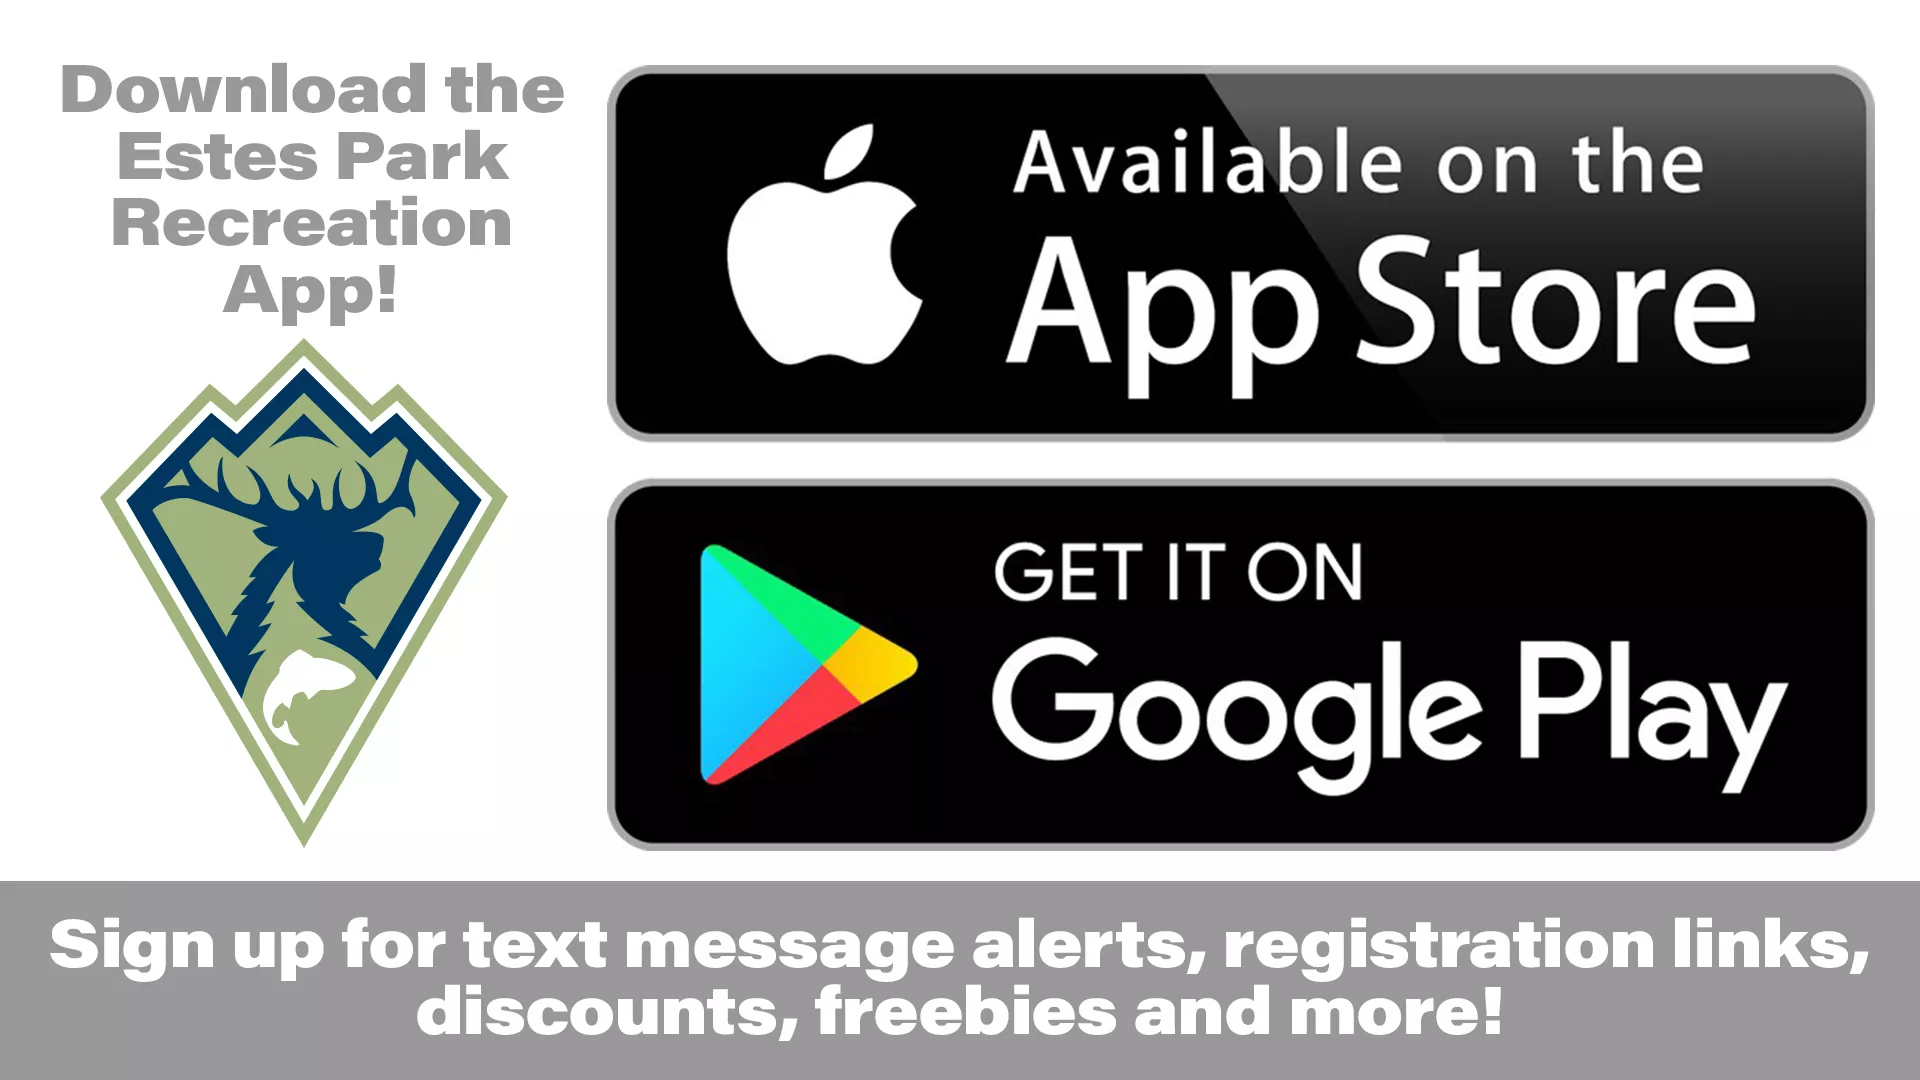 Download the Estes Park Recreation App today!